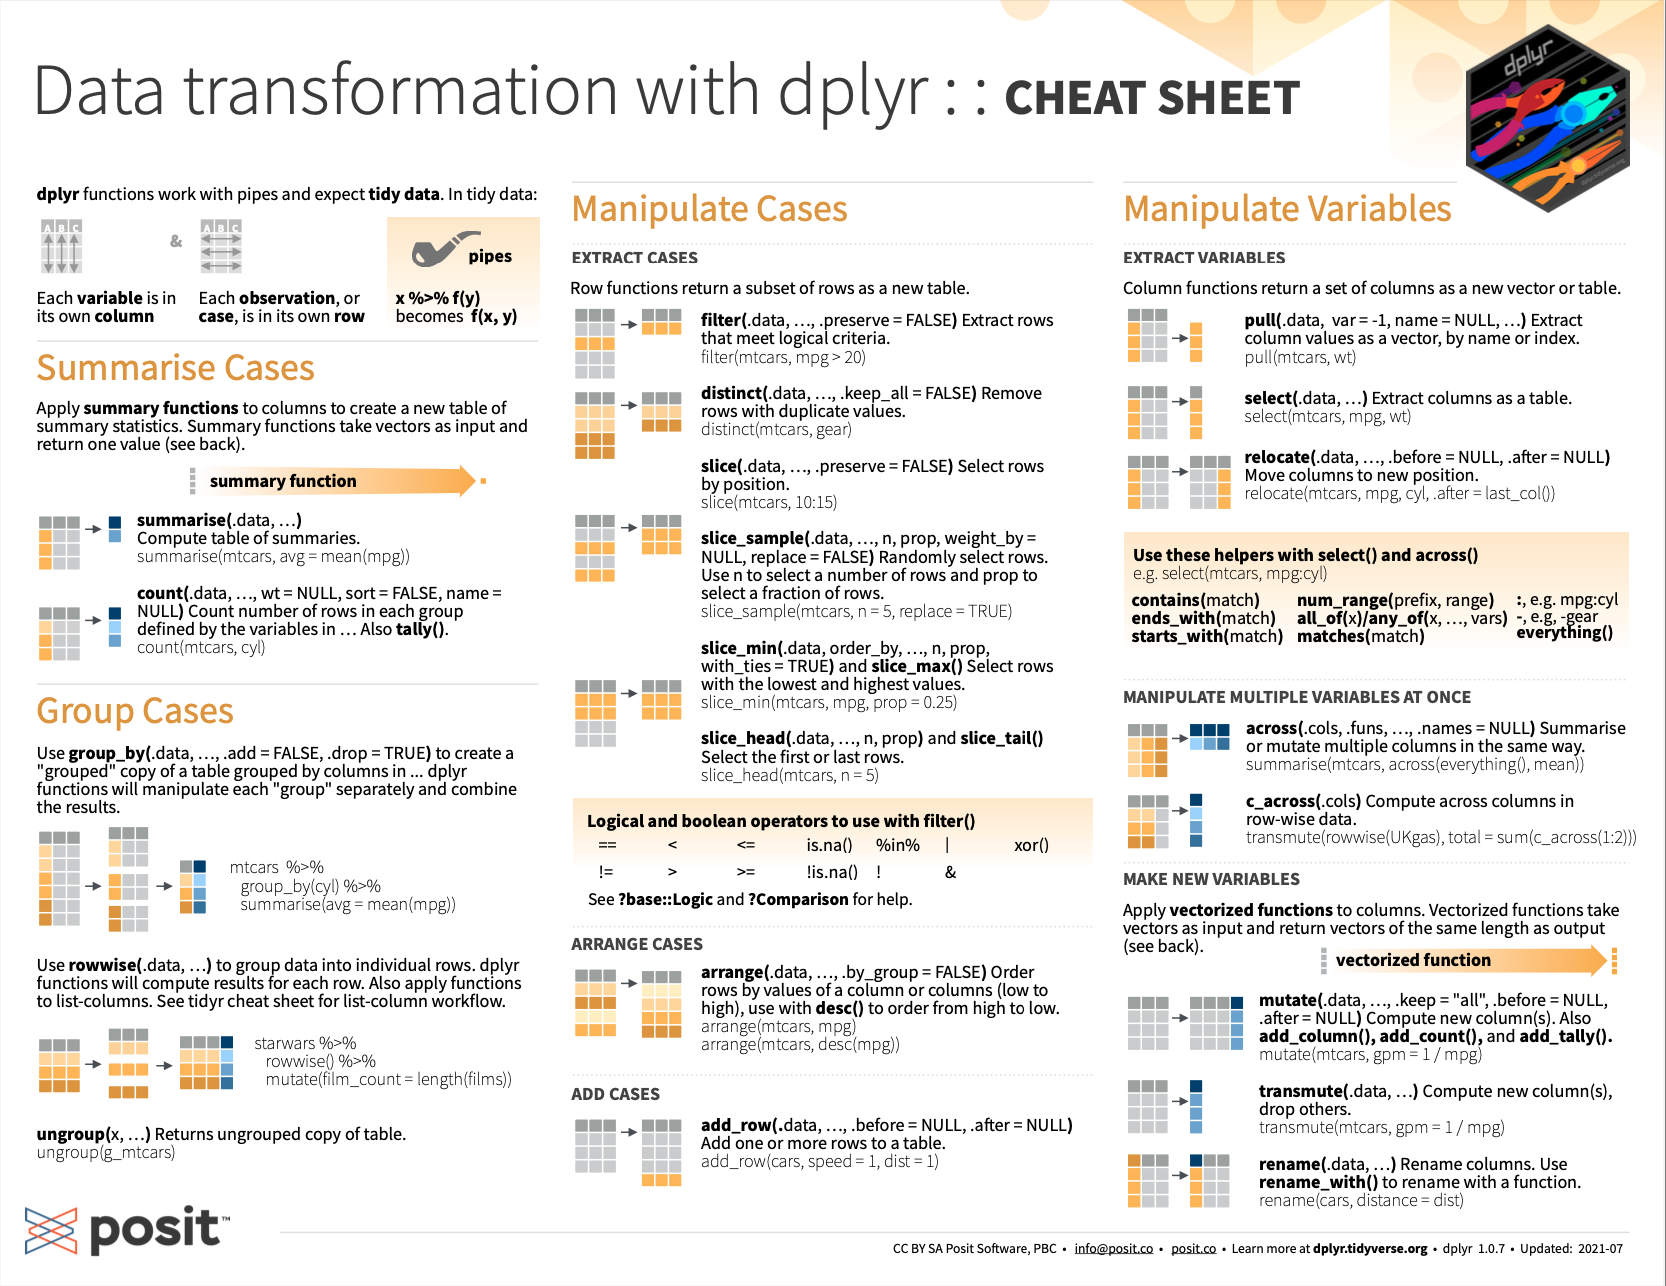 Data transformation with dplyr from RStudio cheatsheets.